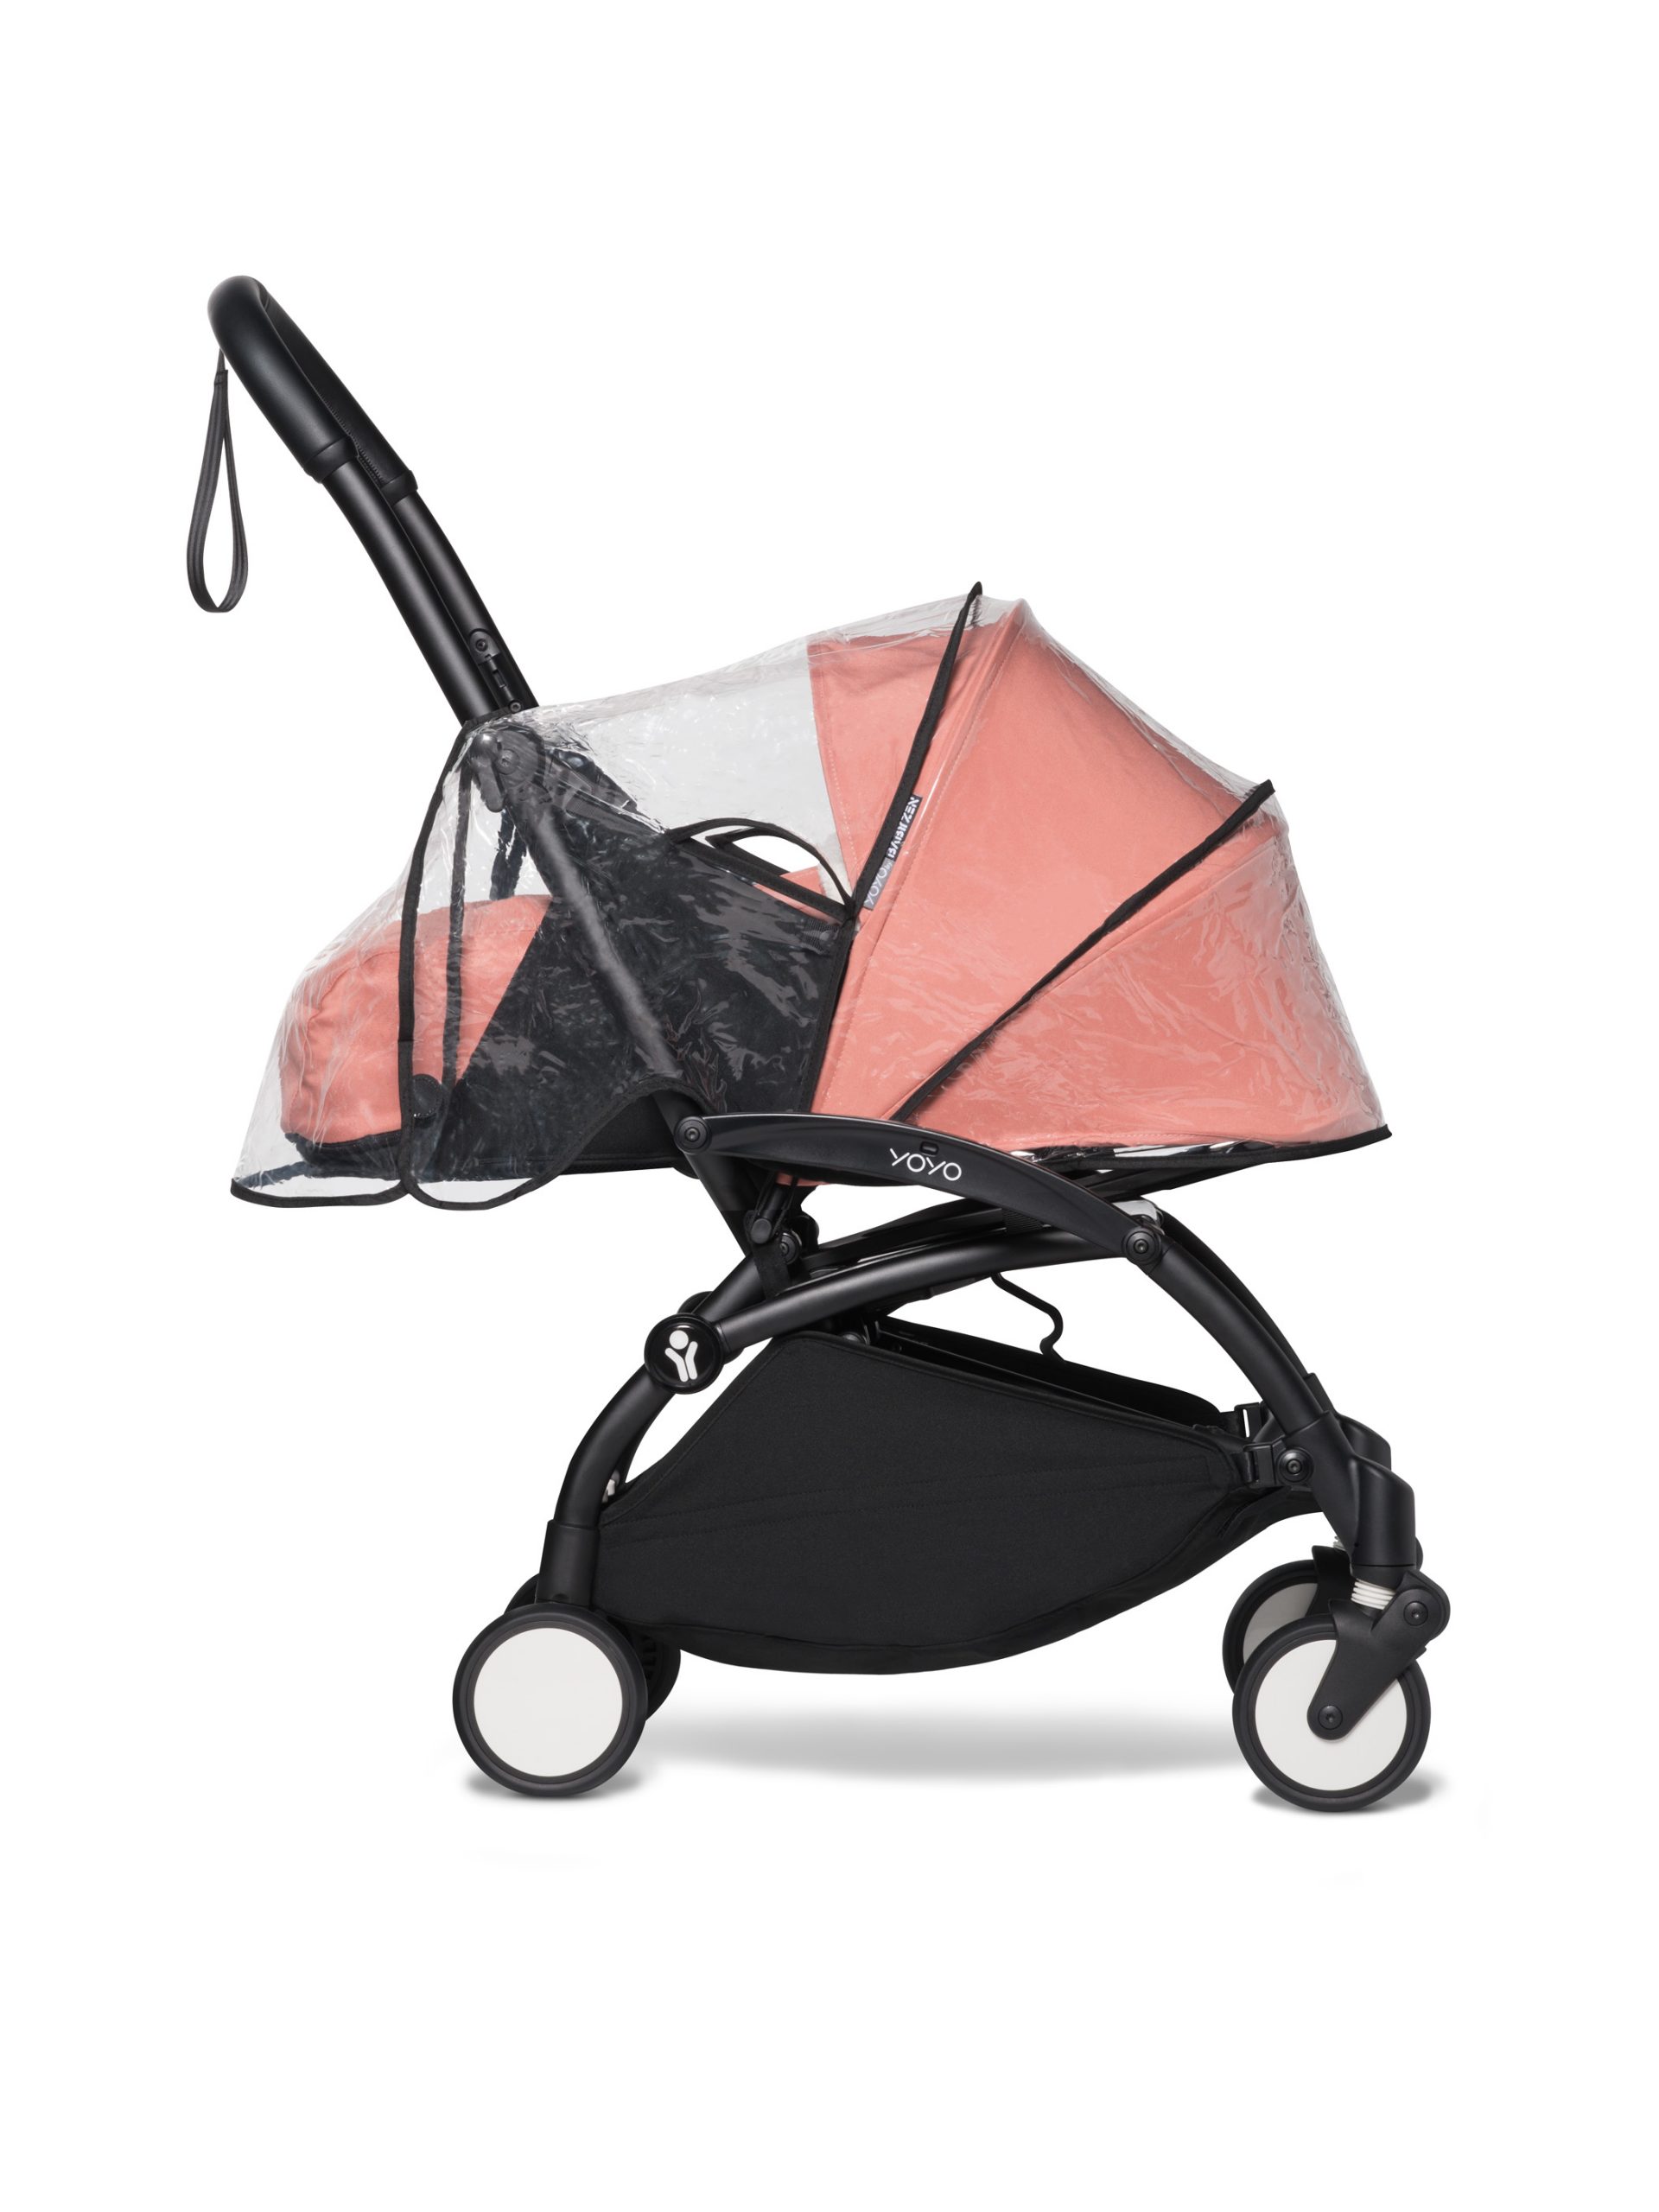 Windproof 2019 Upgraded Version Protection Umbrella Ventilation Stroller Rain Cover Baby Travel Weather Shield for Babyzen YOYO YOYO+ Strollers Shade Waterproof See Thru 